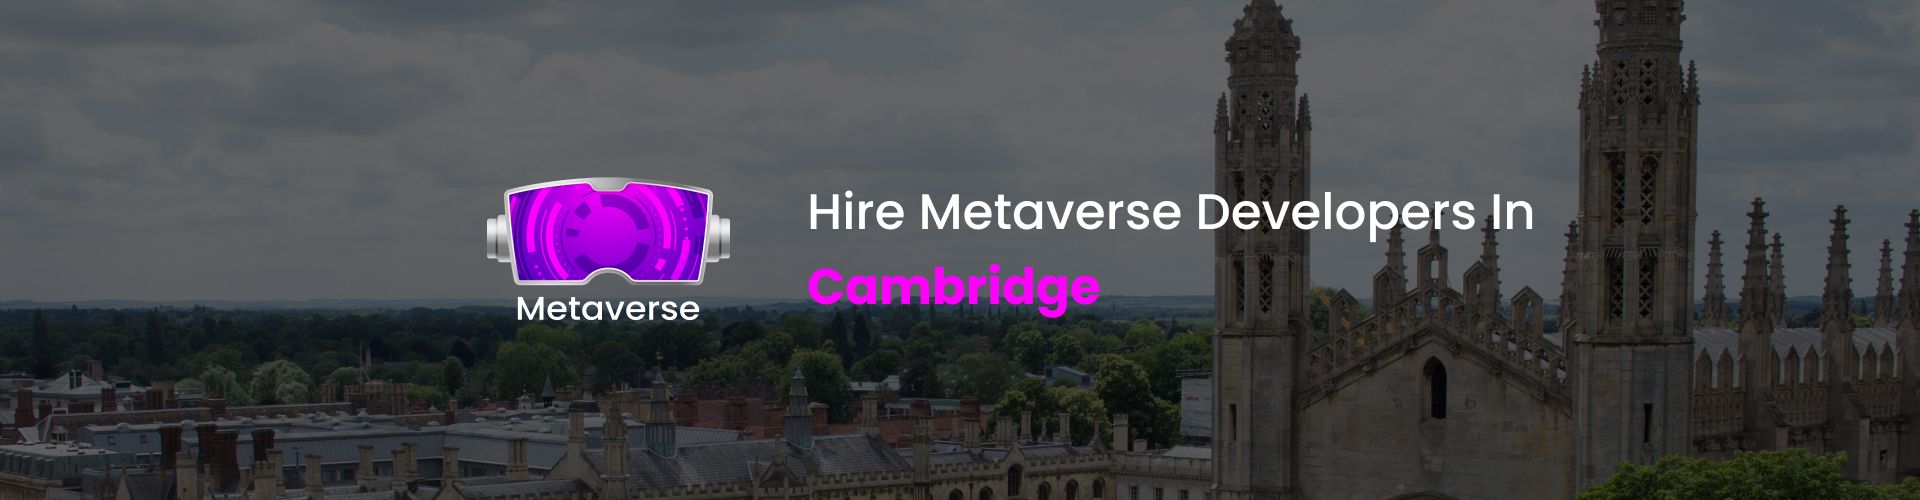 hire metaverse developers cambridge